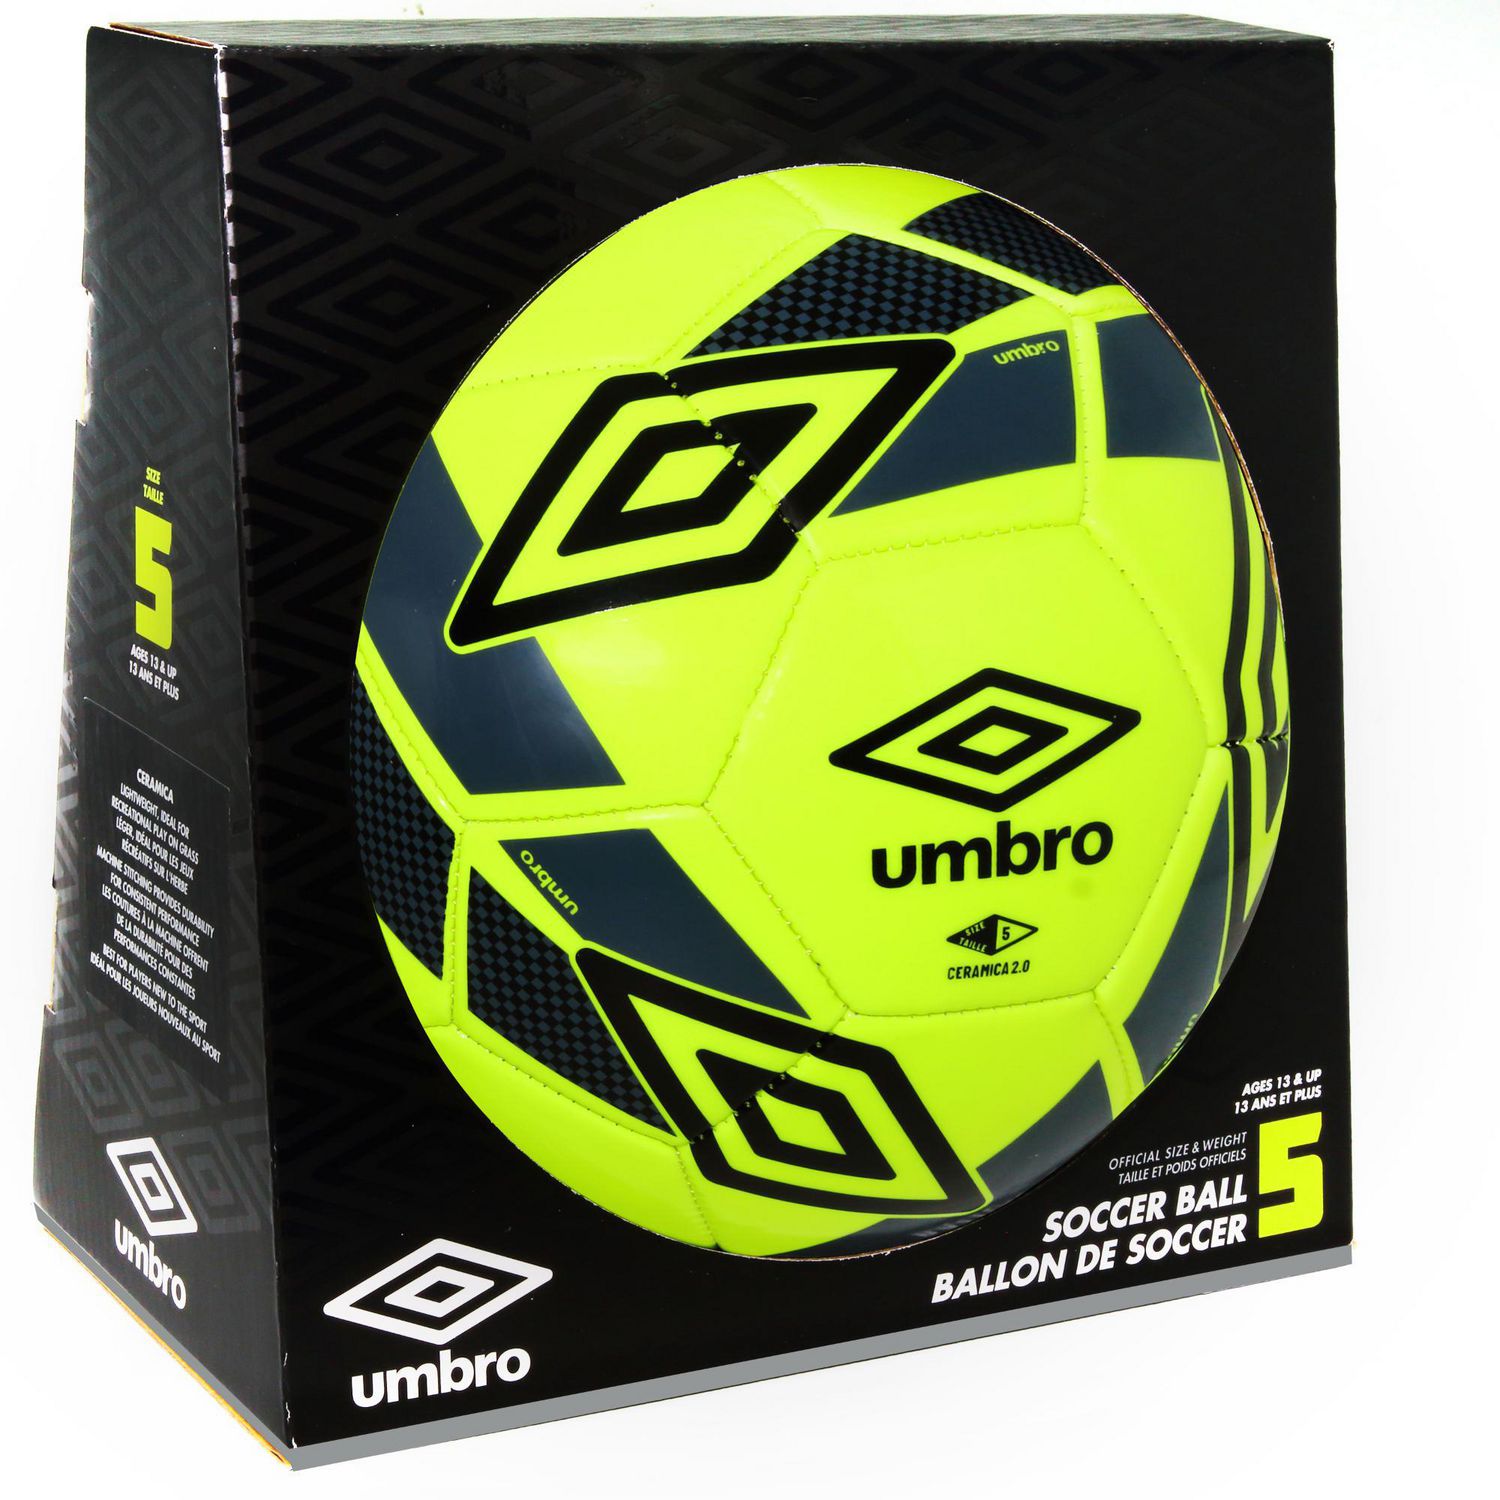 Umbro Ceramica Yellow Soccer Ball, Sizes 3, 4, and 5 - Walmart.ca